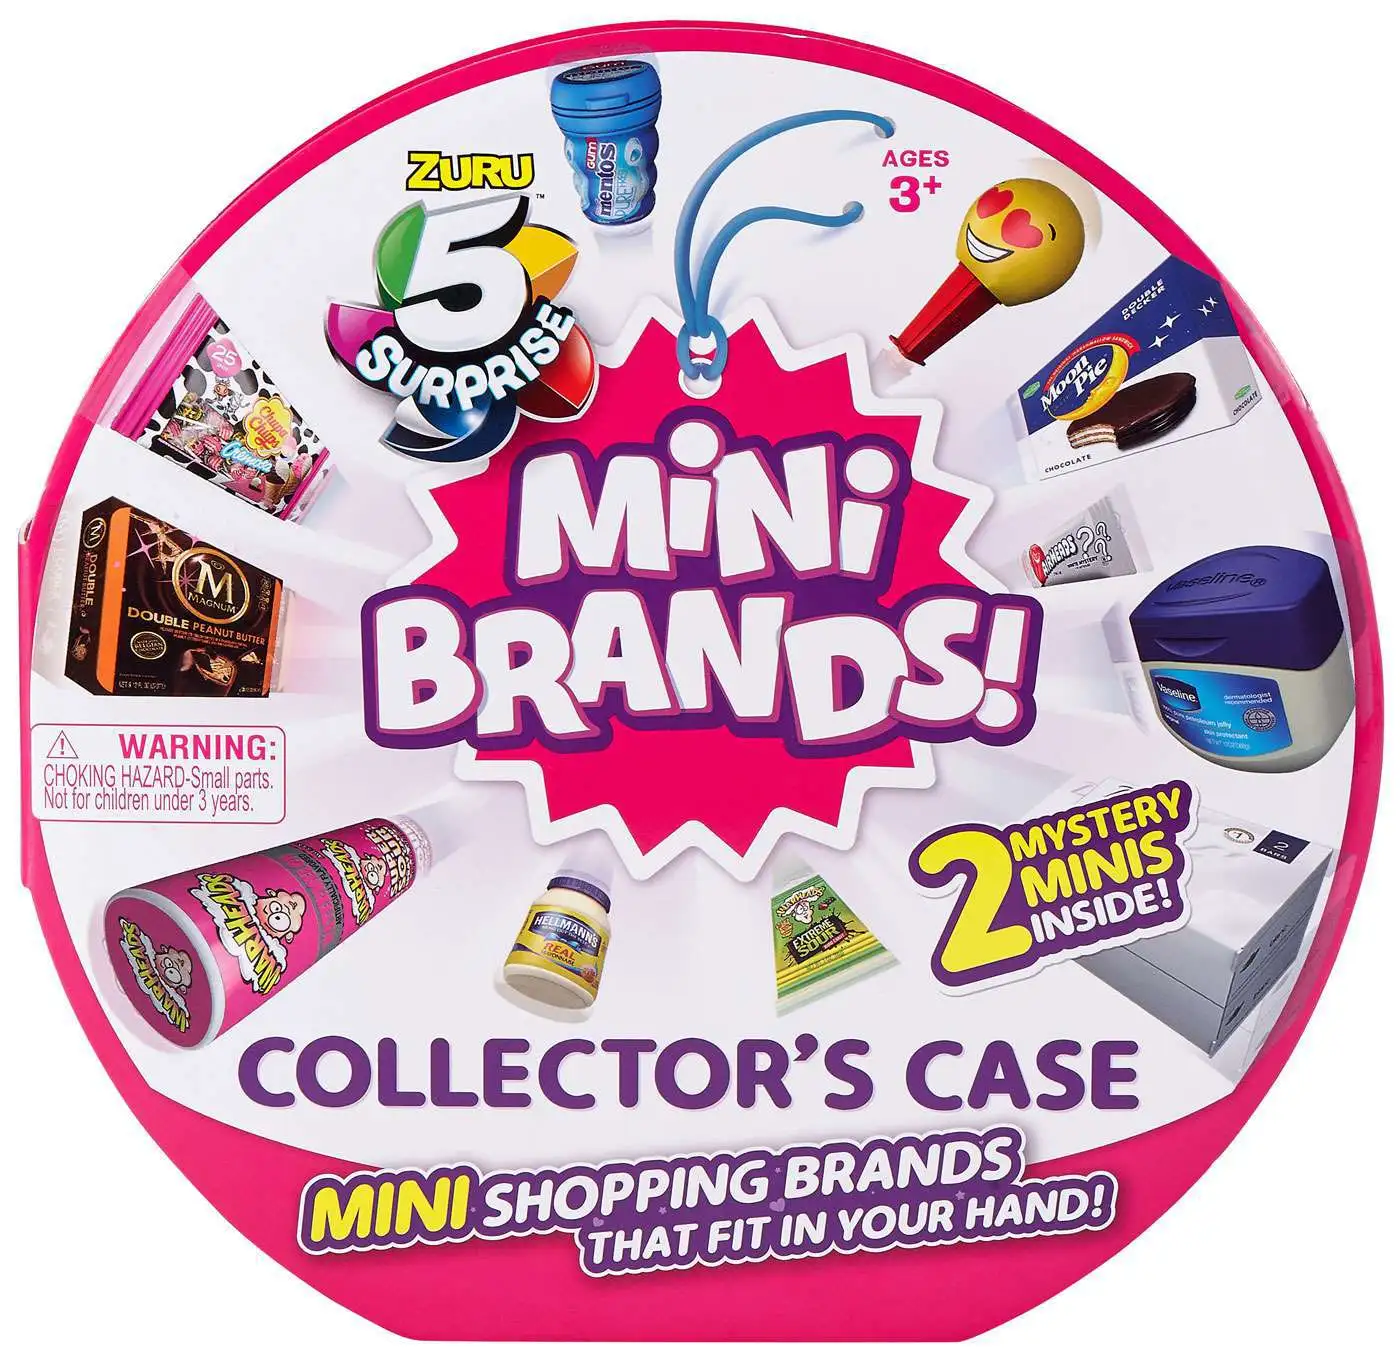 Zuru 5 Surprise Toy Mini Brands Series 2 Collector's Case, 1 ct